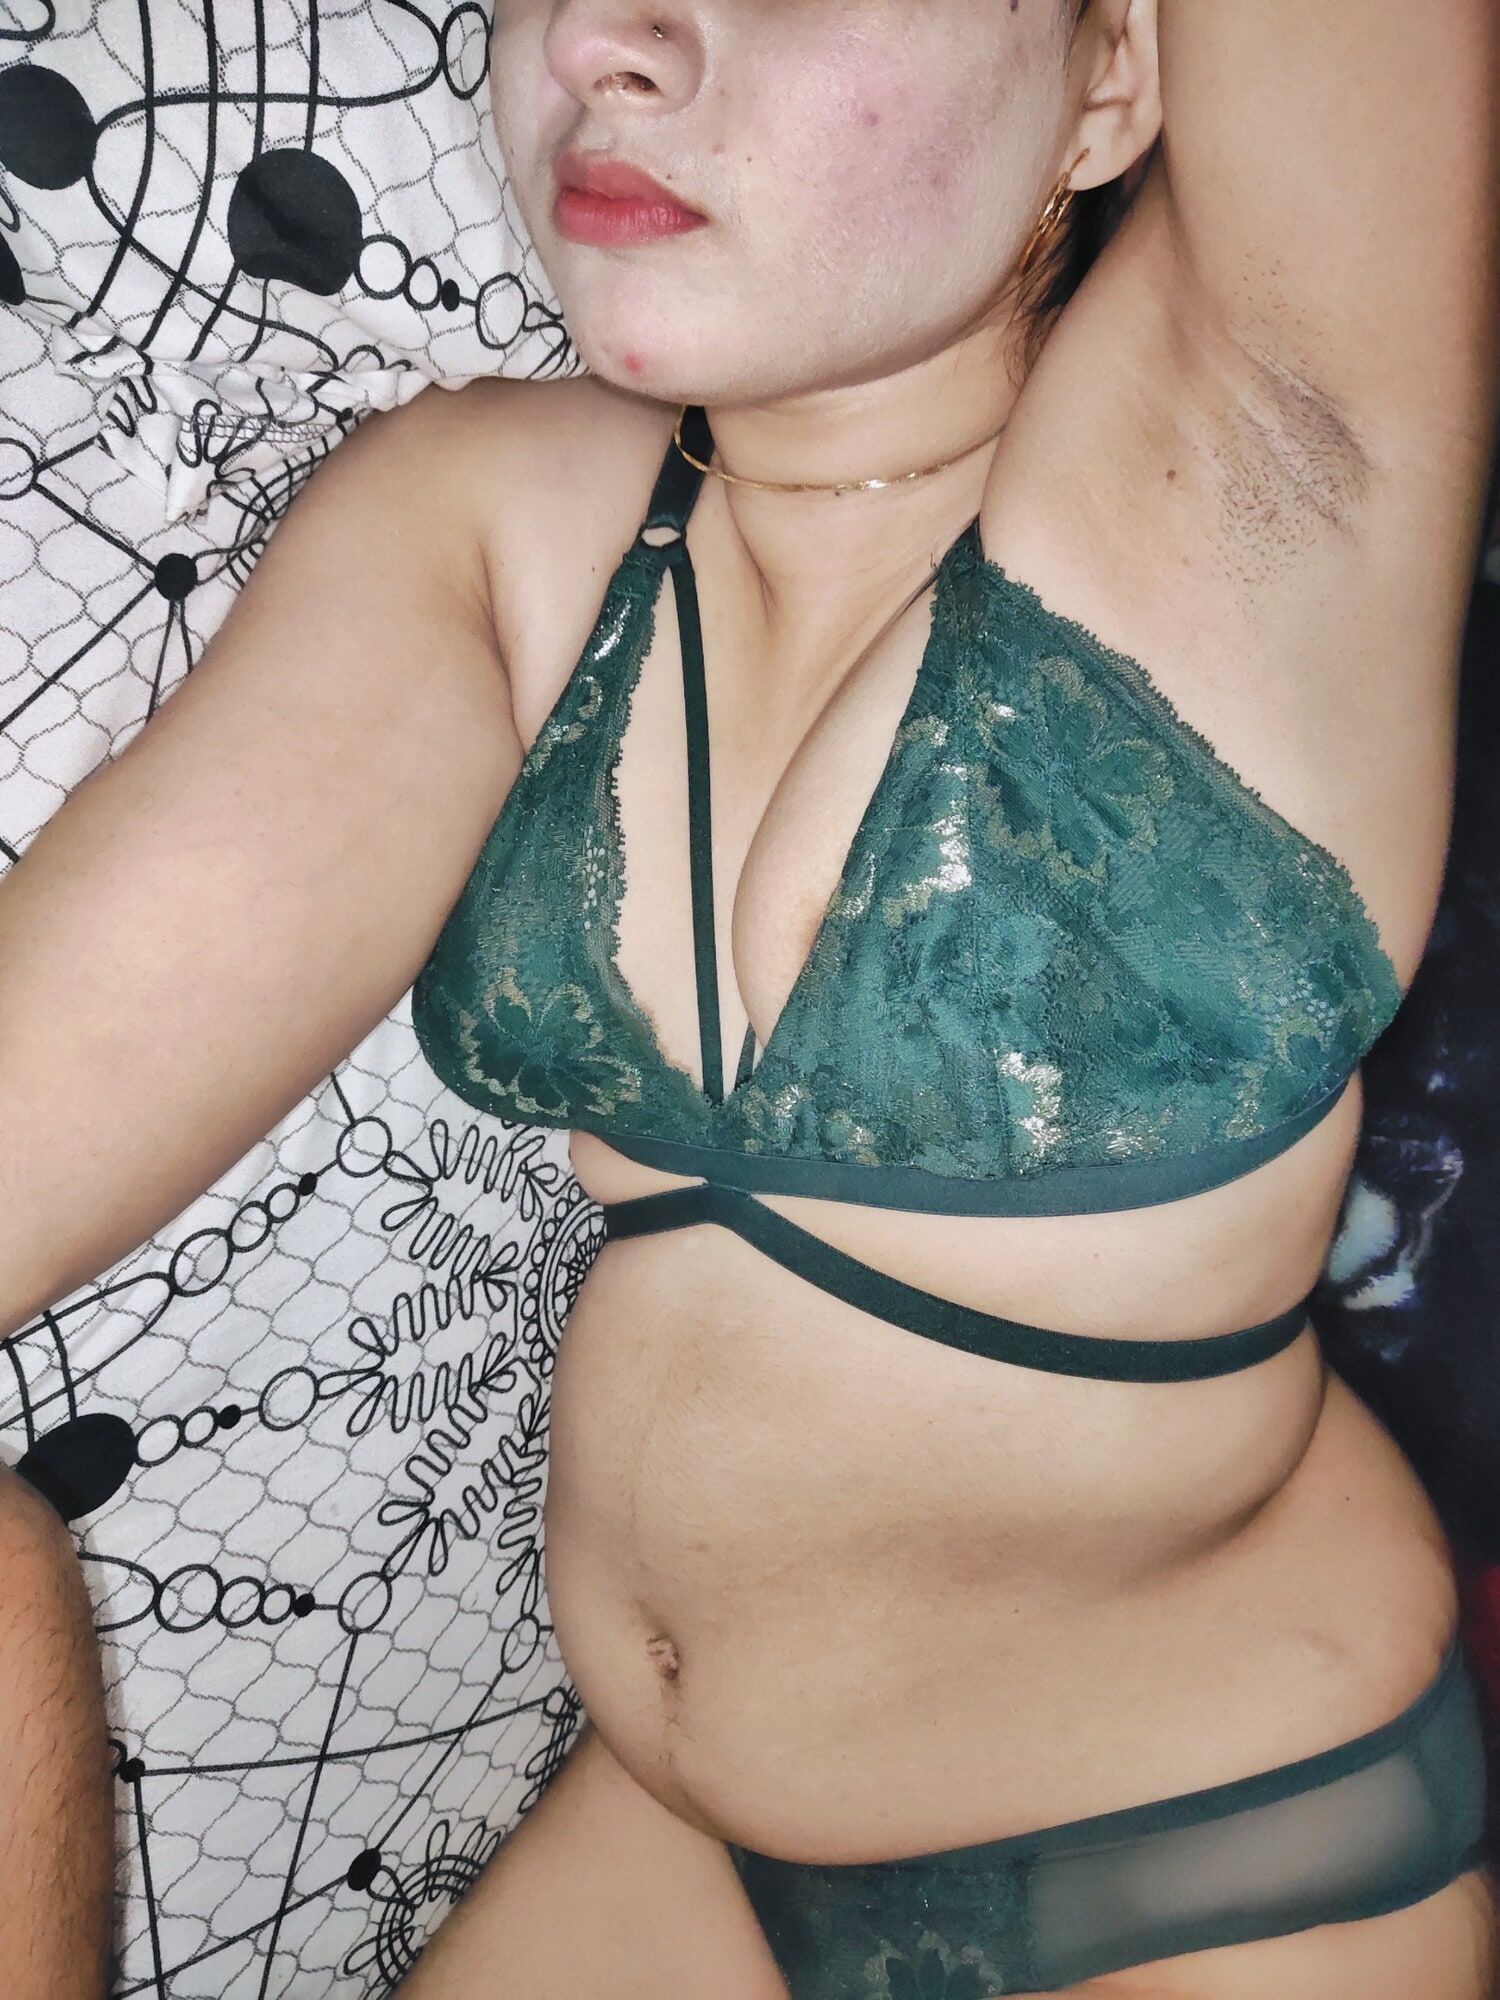 My Armpits in green bra #8